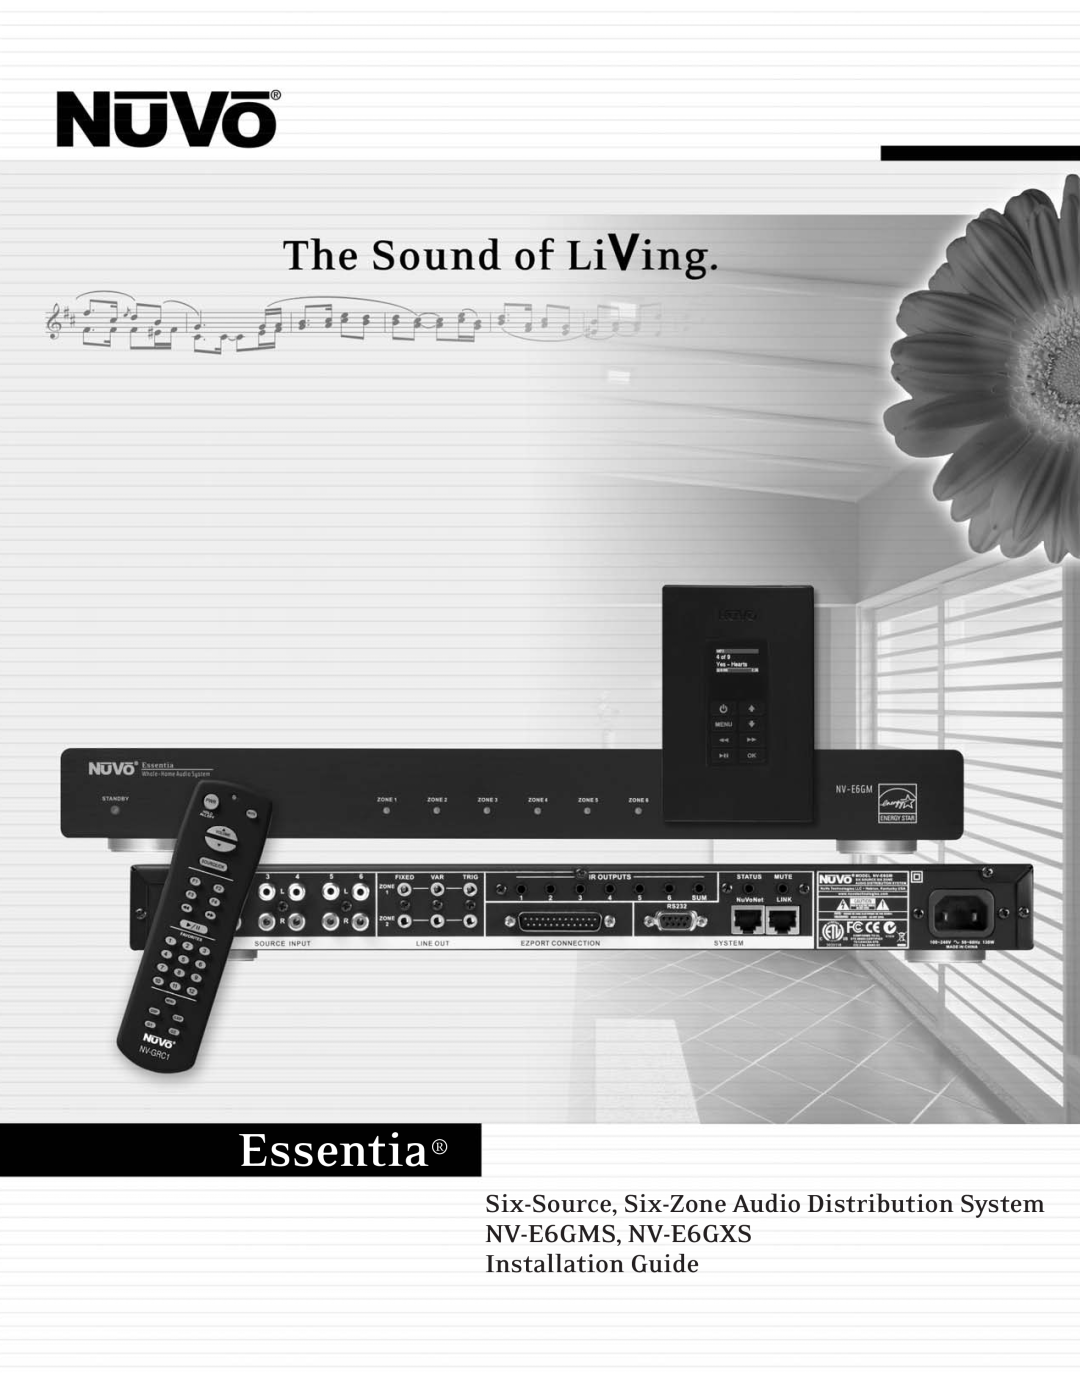 Nuvo manual Six-Source, Six-ZoneAudio Distribution System, NV-E6GMS, NV-E6GXS Installation Guide, Essentia 